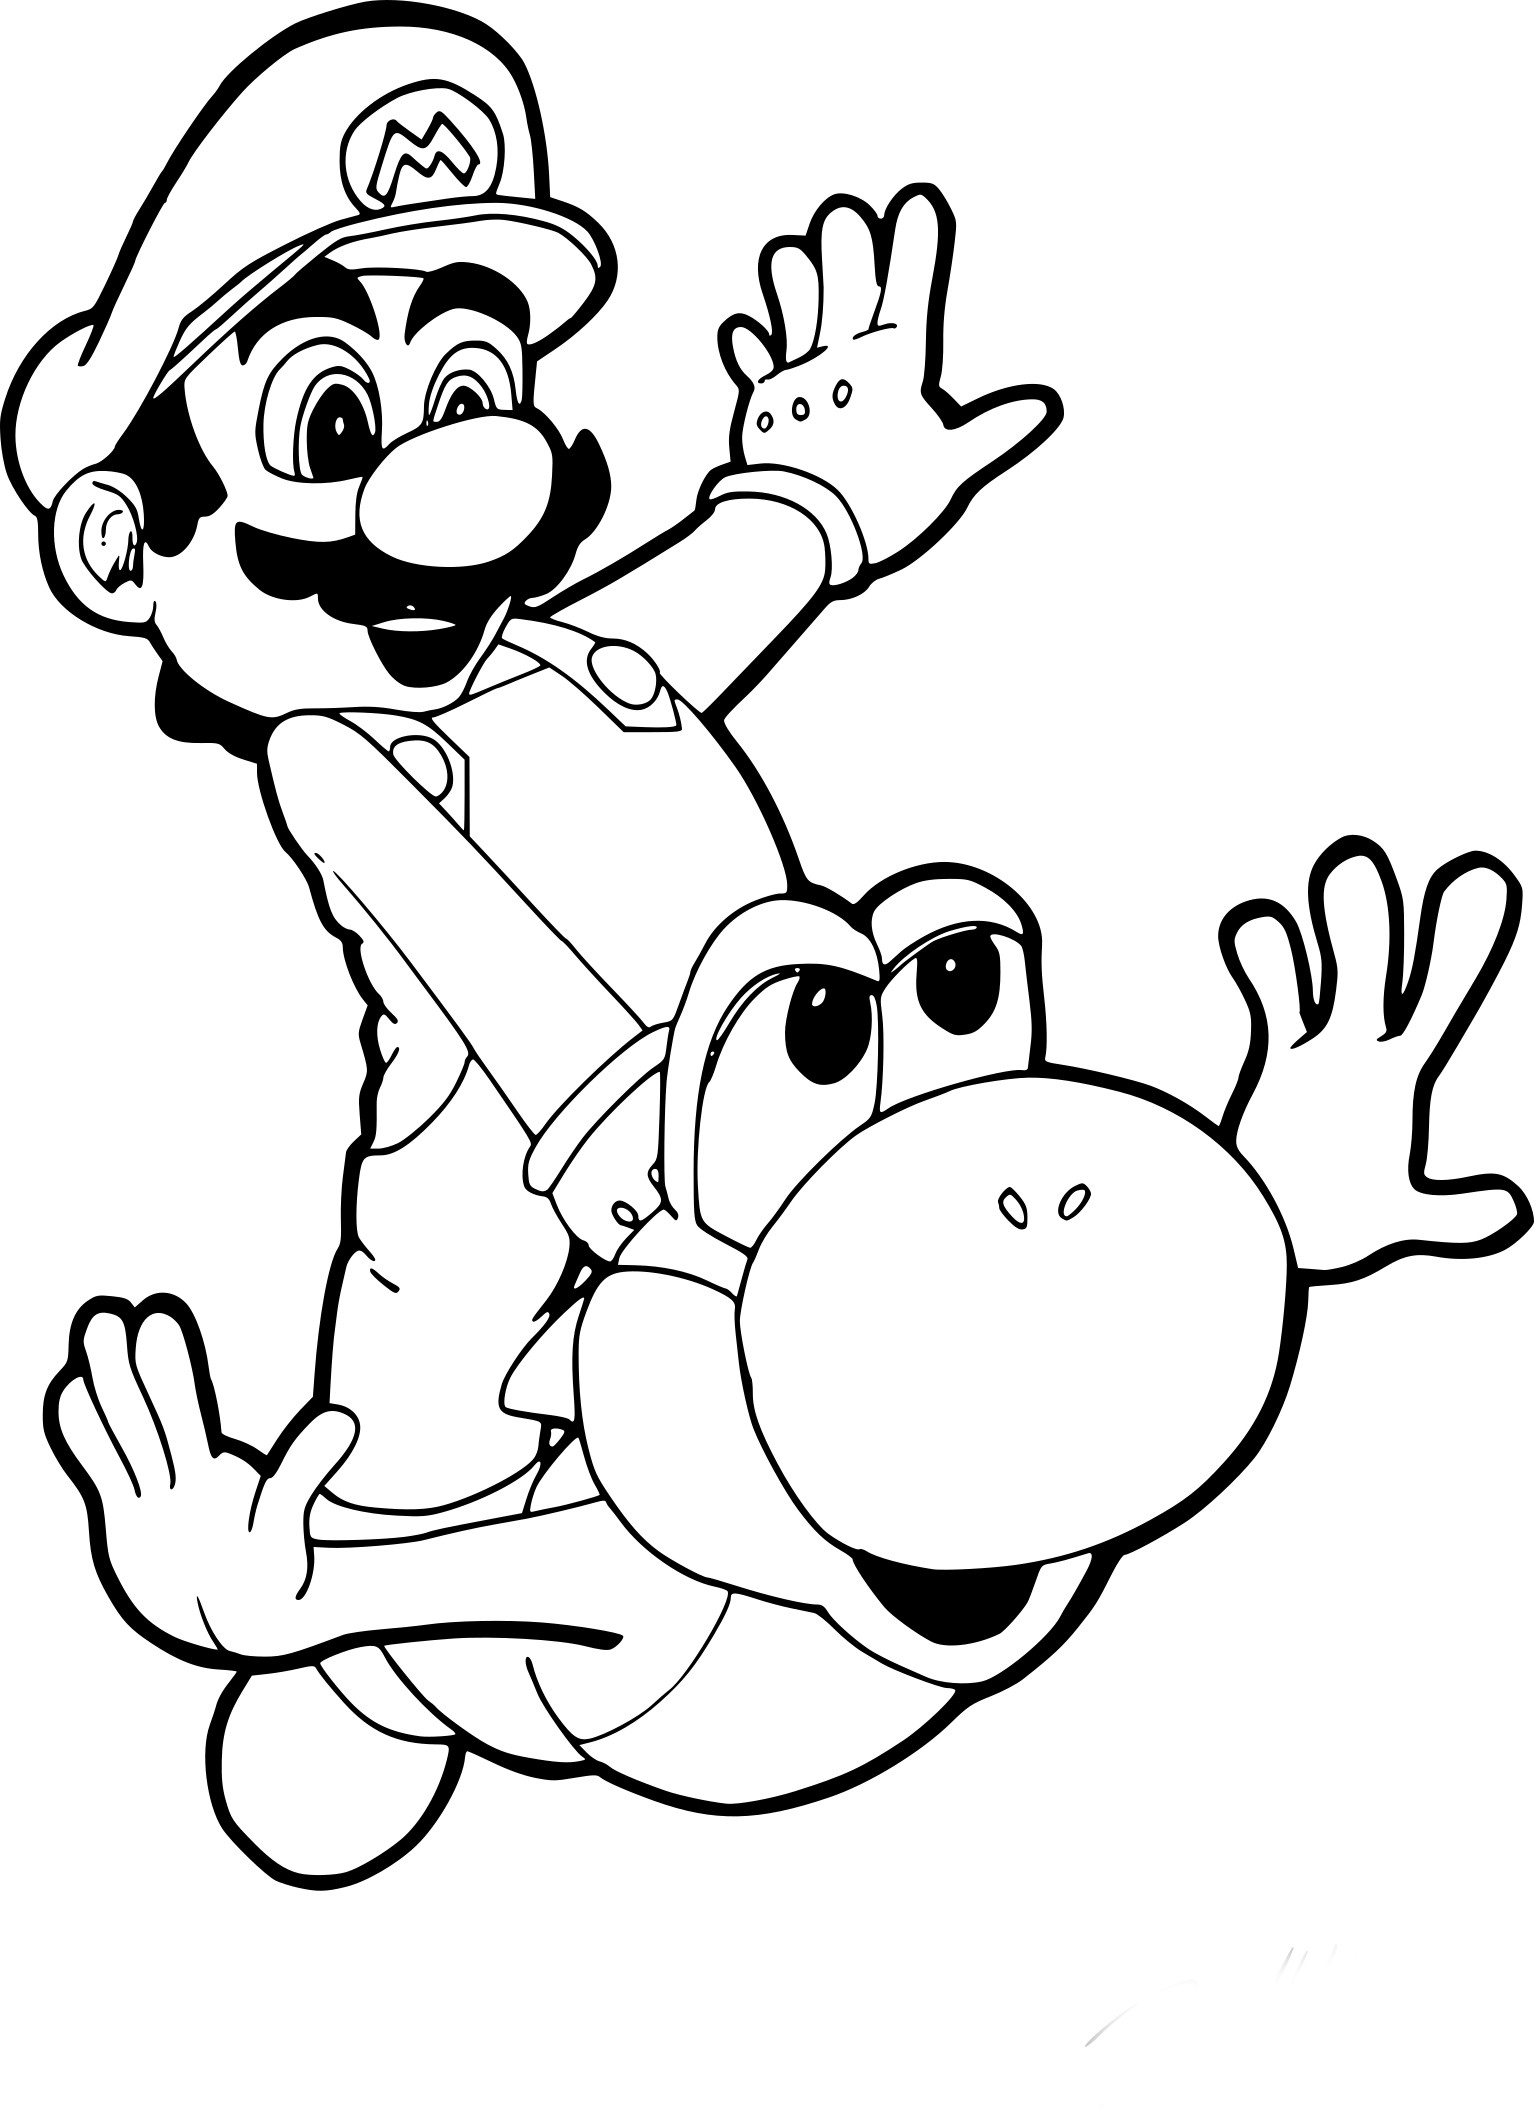 Coloriage Mario Et Yoshi À Imprimer dedans Dessin A Imprimer Mario Et Luigi 